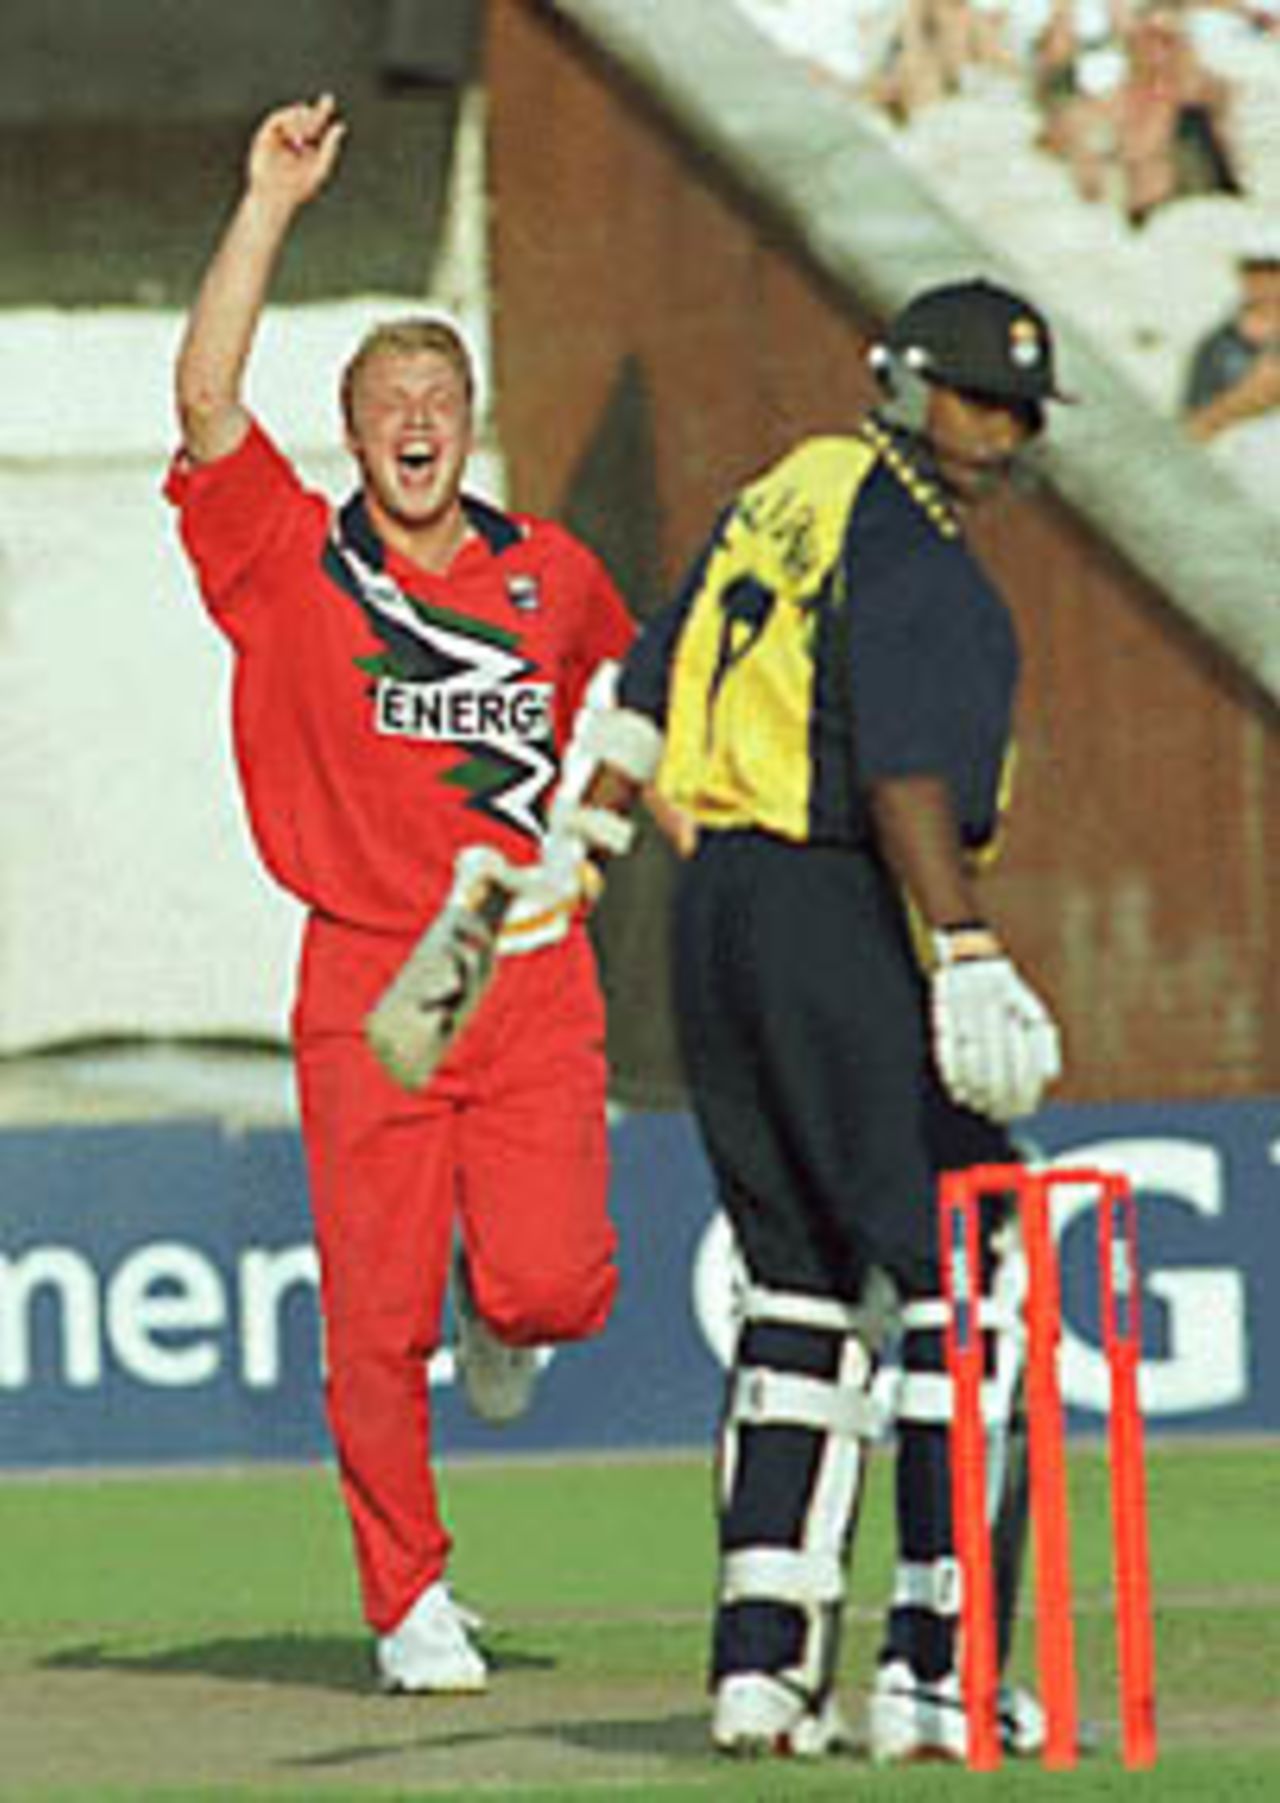 Andrew Flintoff celebrating the wicket of Mascarenhas, Hampshire v Lancashire, National League 1st Division, 6 September 1999